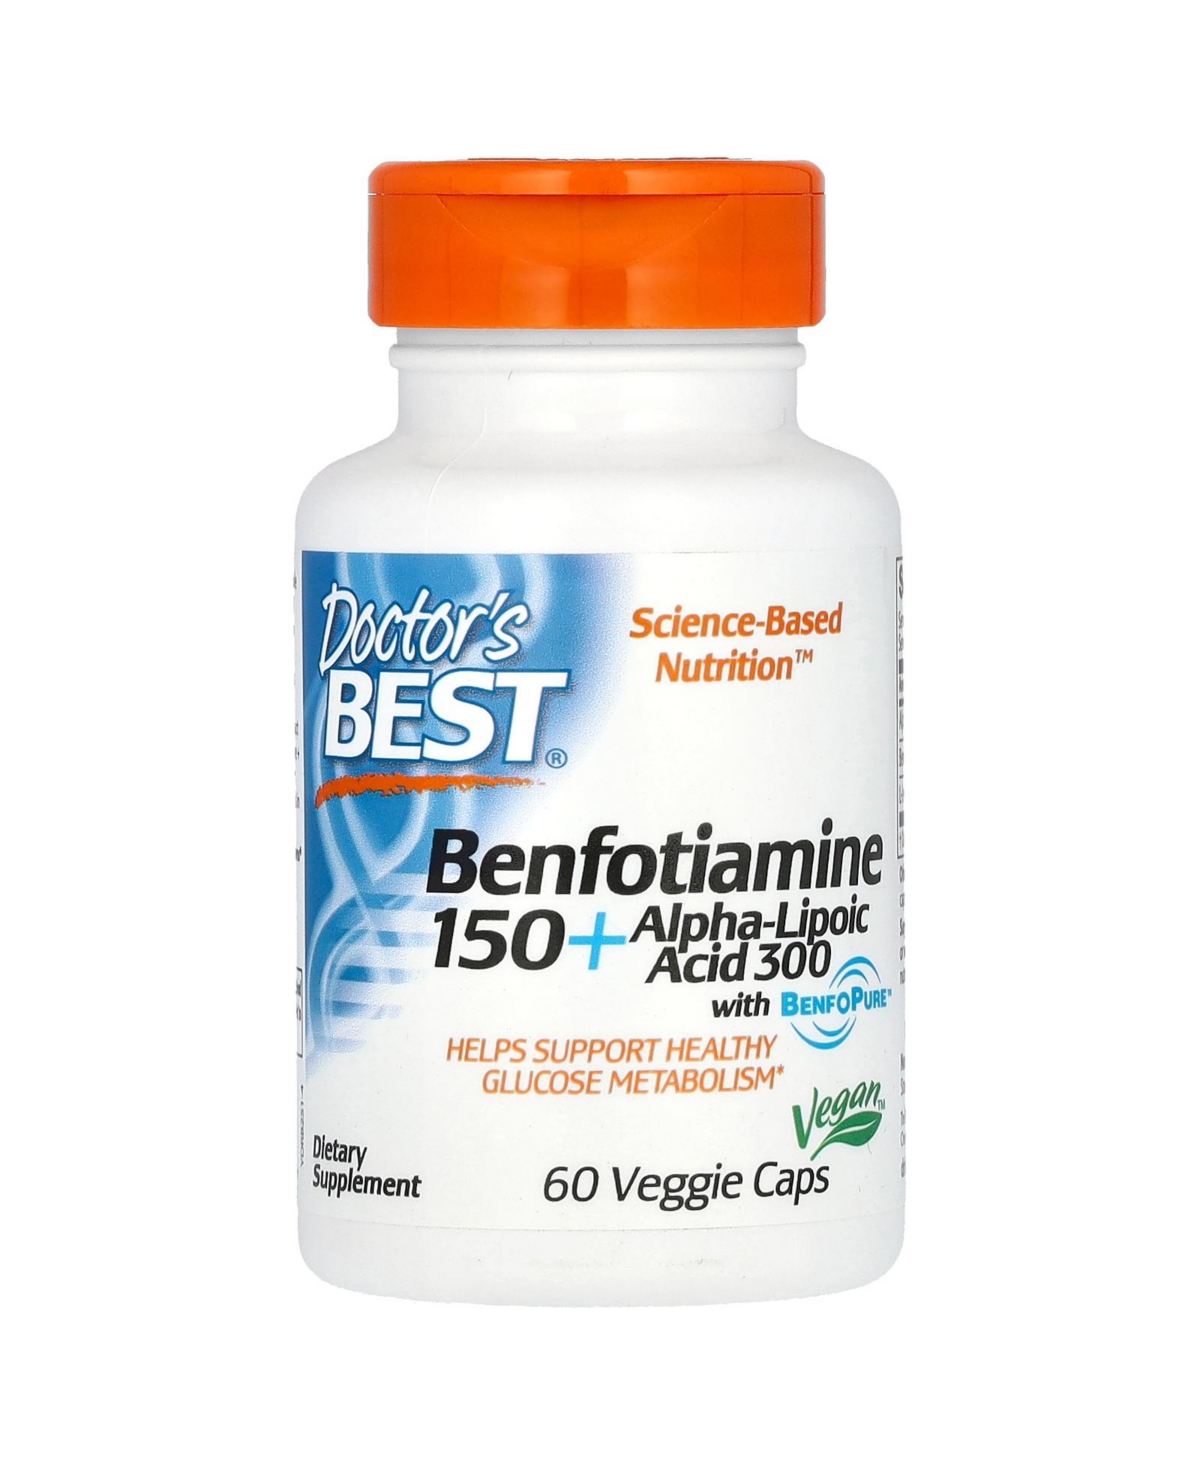 Benfotiamine 150 + Alpha-Lipoic Acid 300 - 60 Veggie Caps - Assorted Pre-pack (See Table